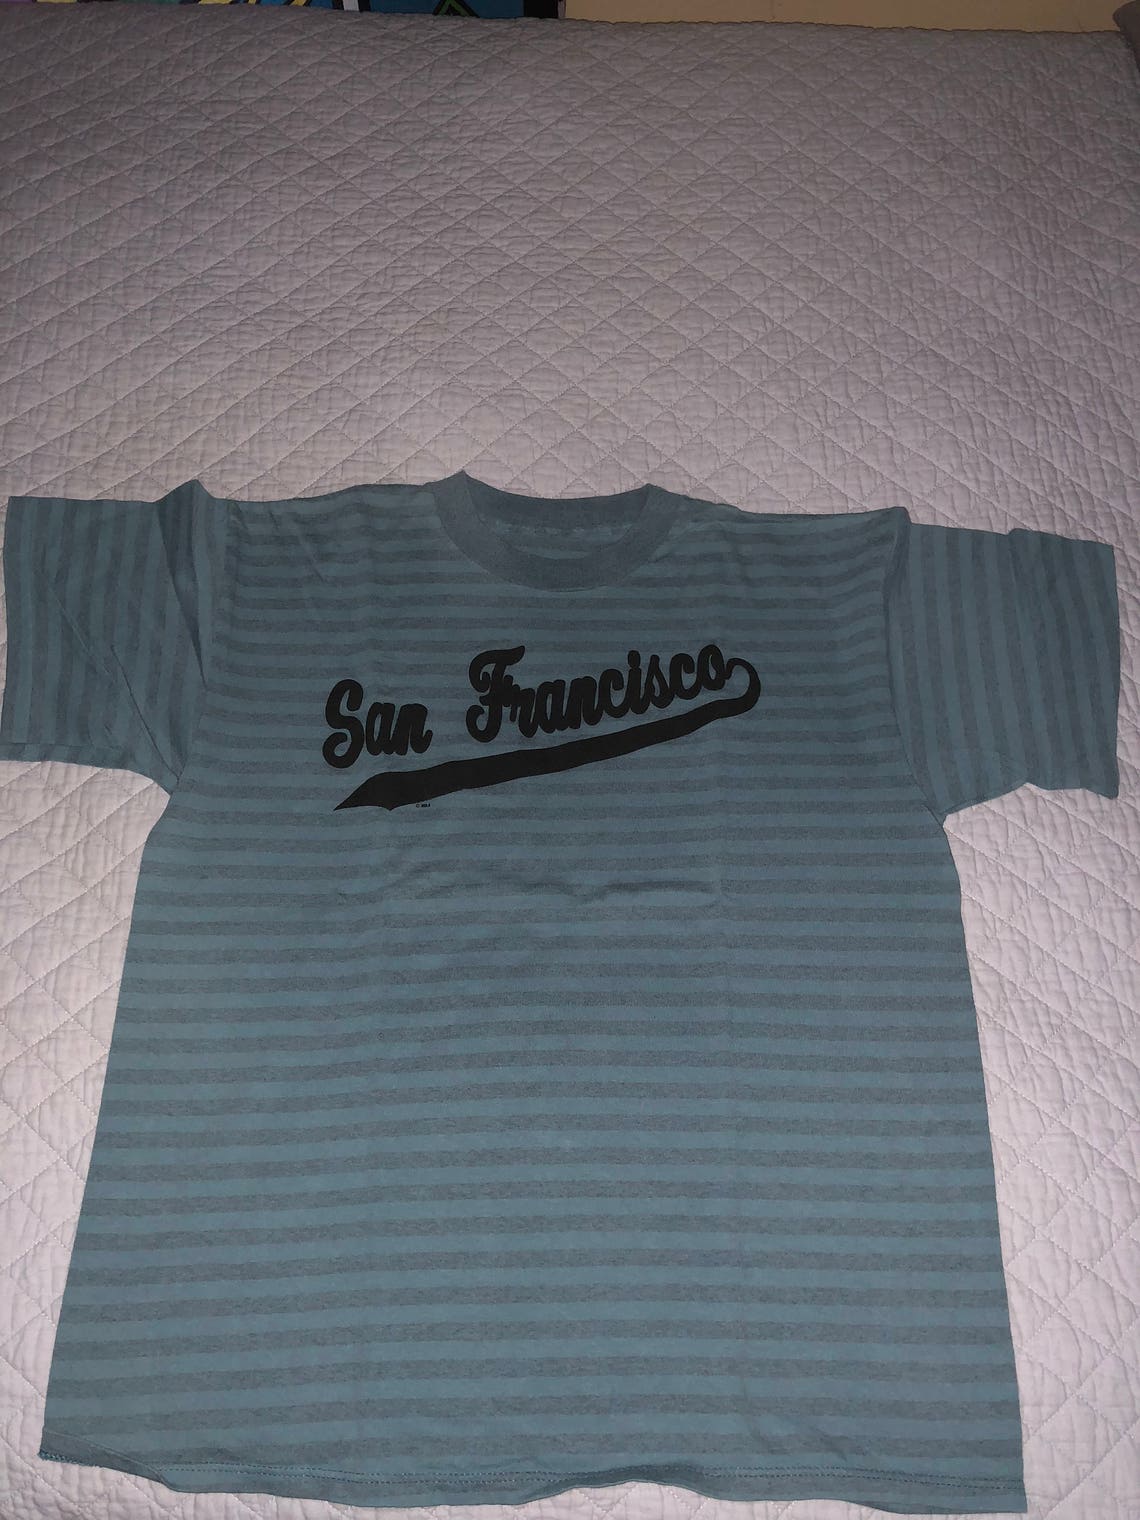 Vintage San Francisco shirt | Etsy